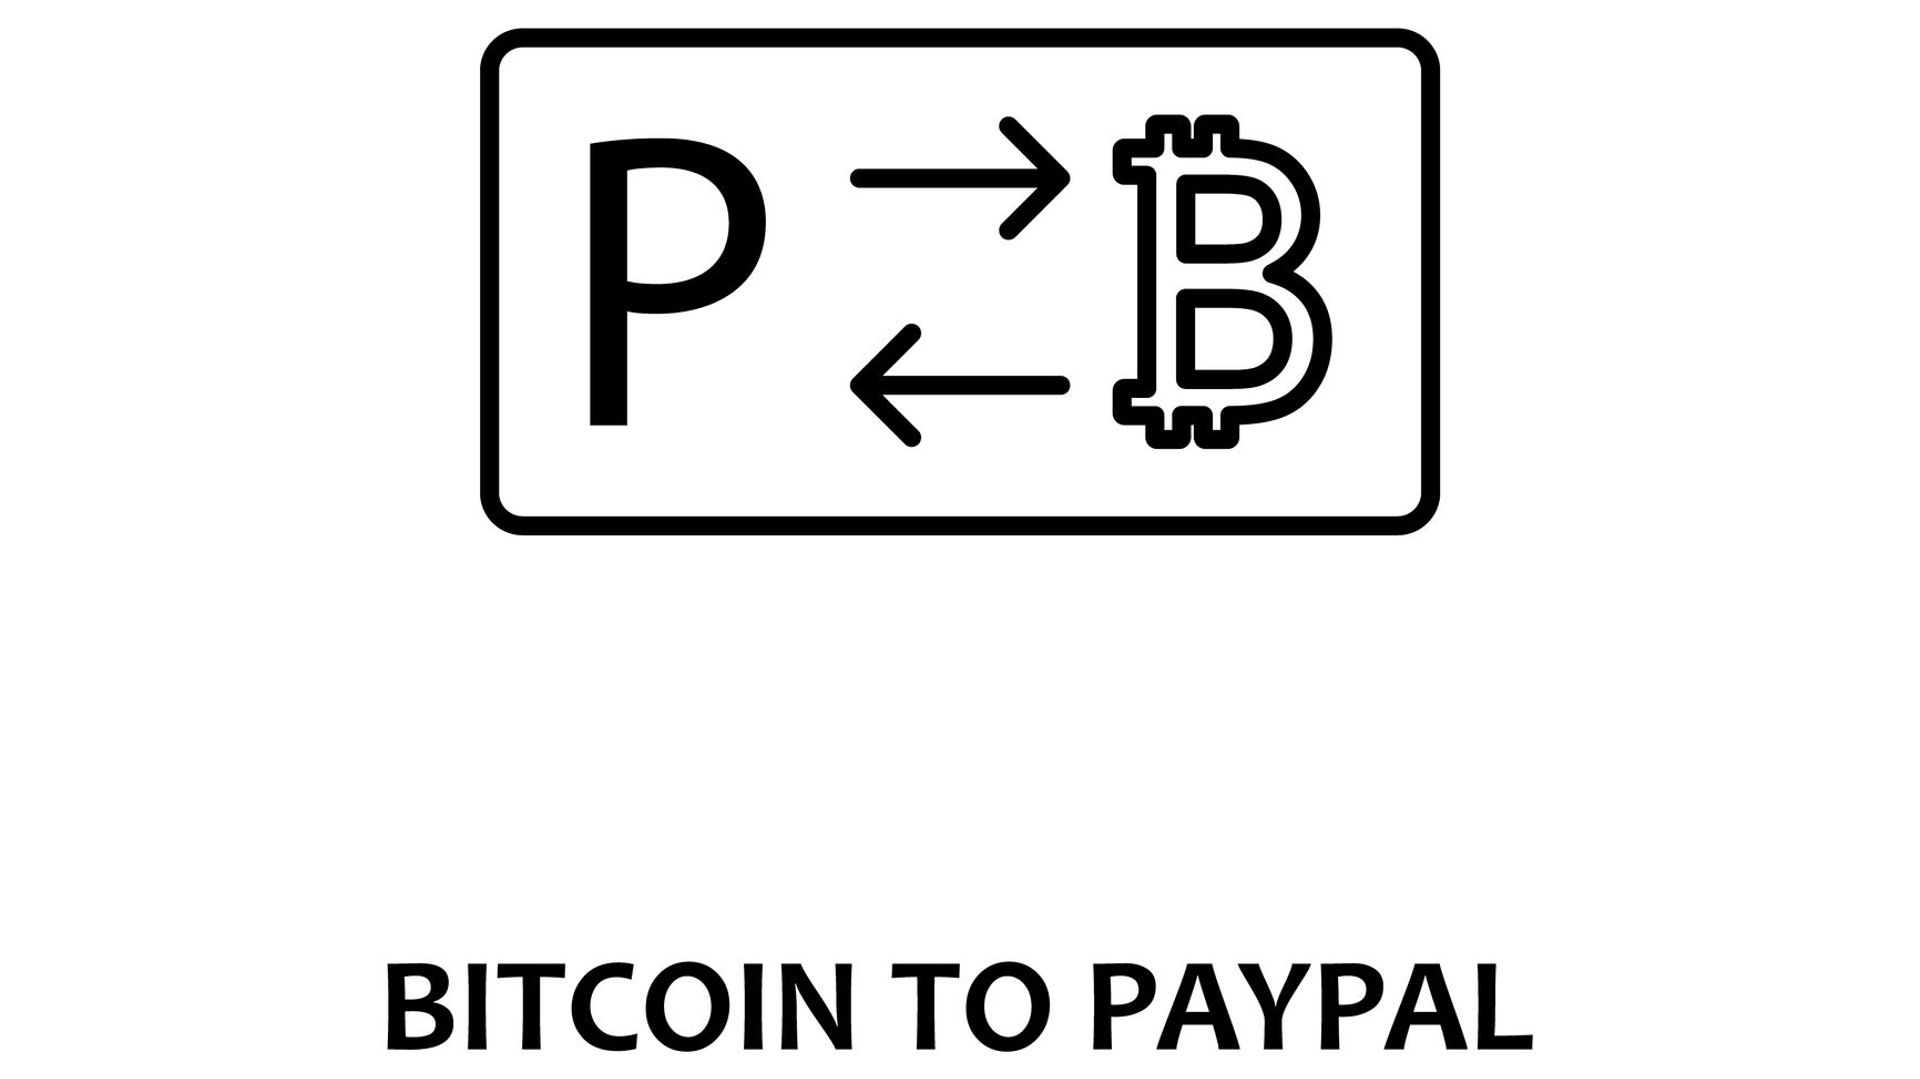 paypal-va-accepter-des-transactions-en-cryptomonnaies